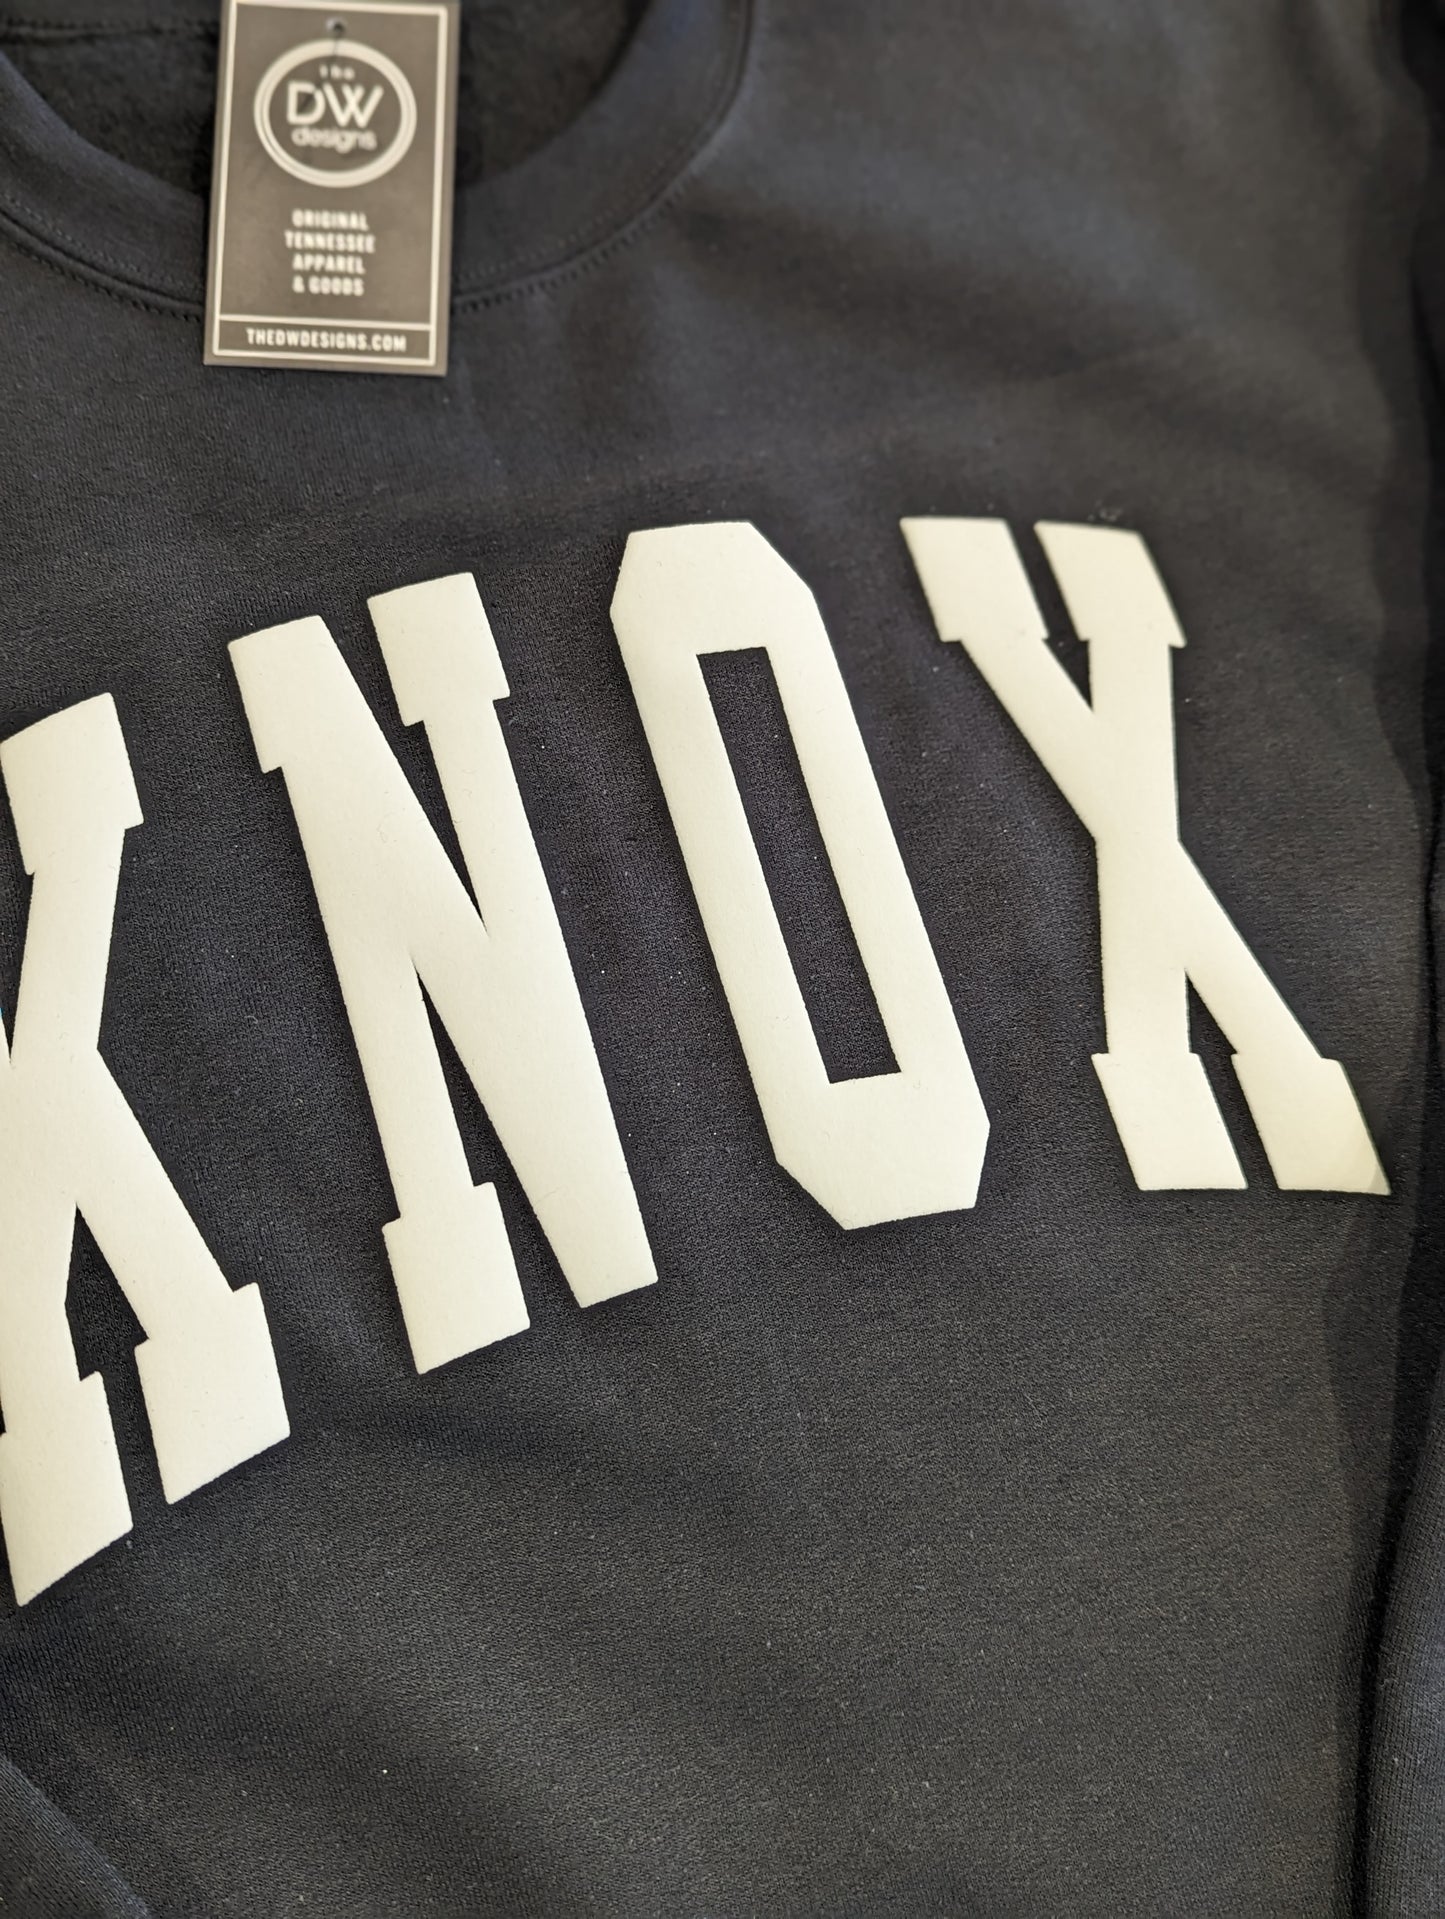 The KNOX PUFF Sweatshirt - BLACK